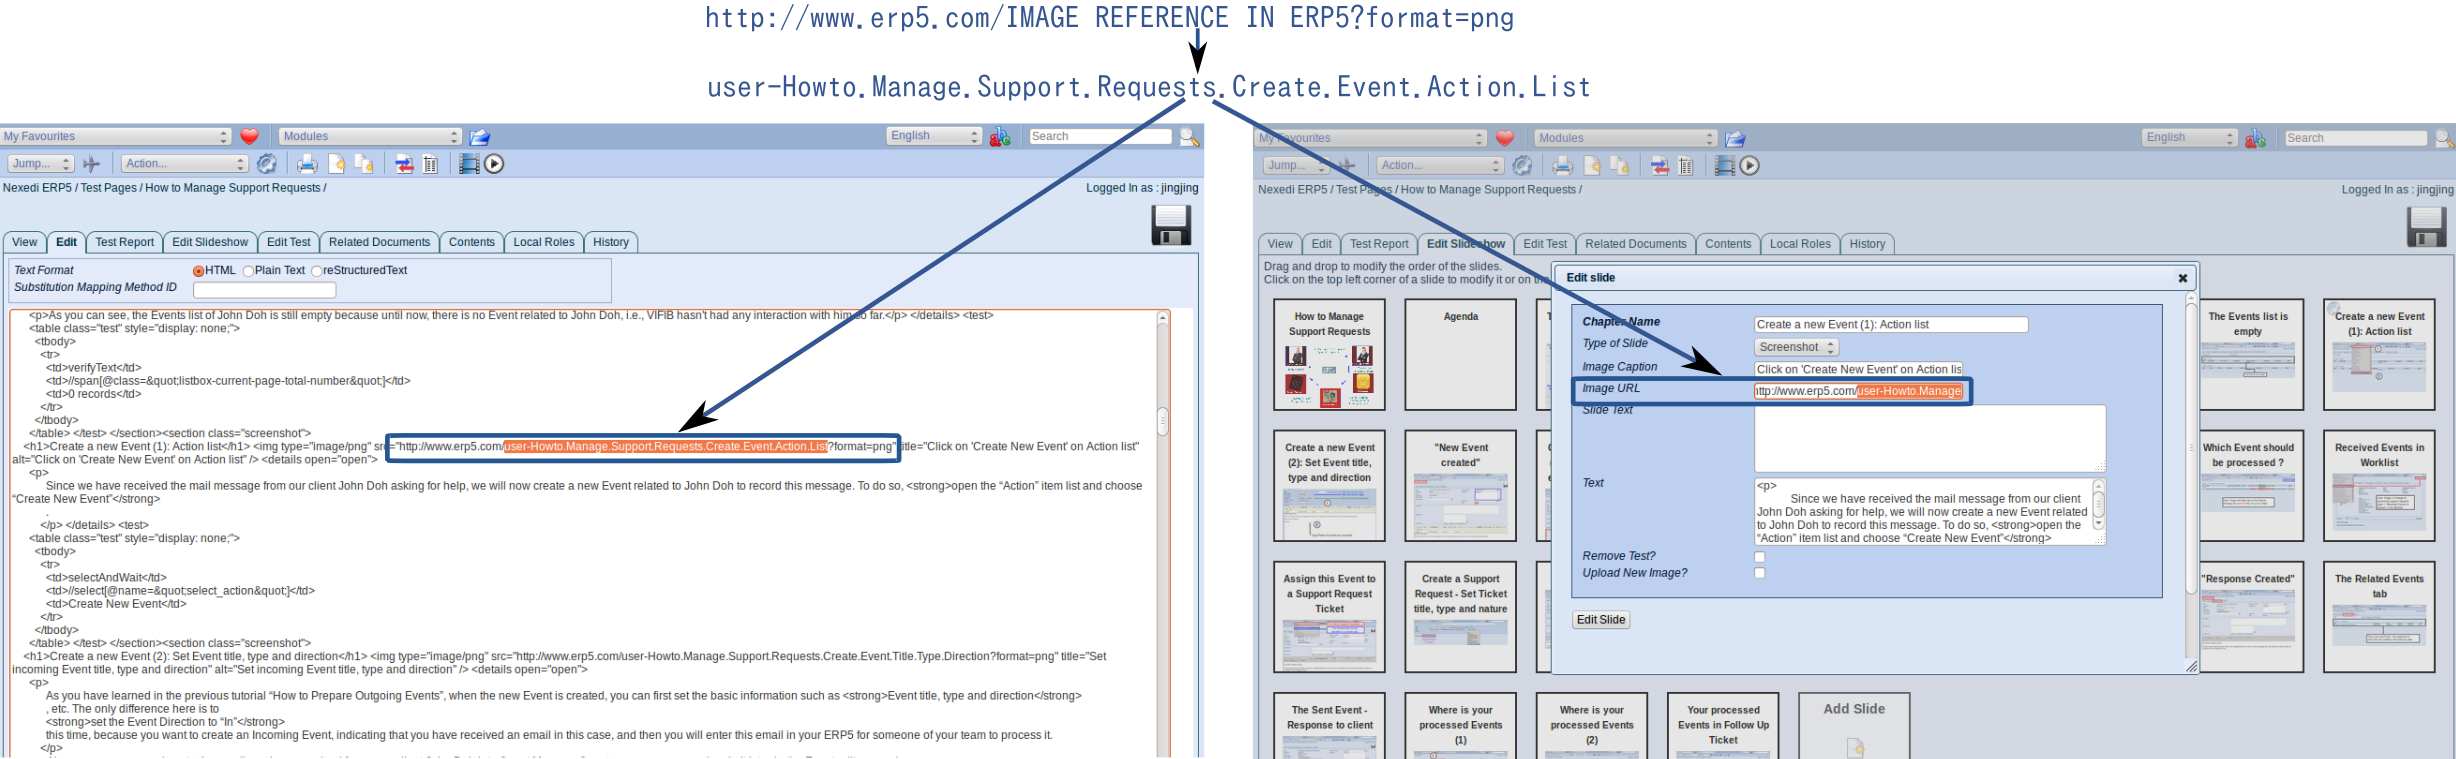 Make standard image with screenshot: Copy svg URL to web page